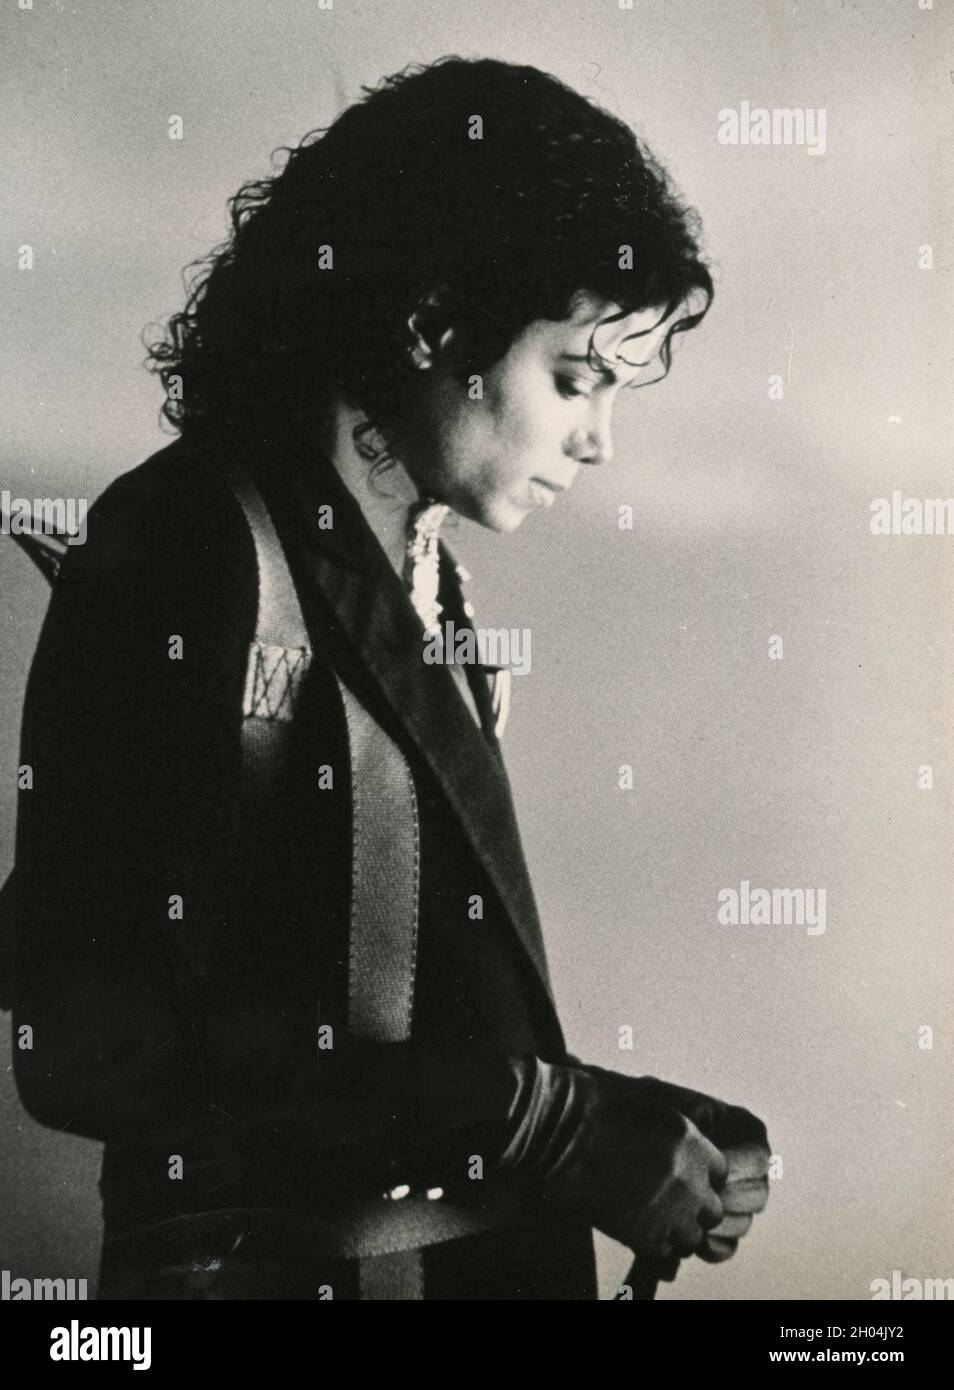 American singer Michael Jackson, 1980s Stock Photo